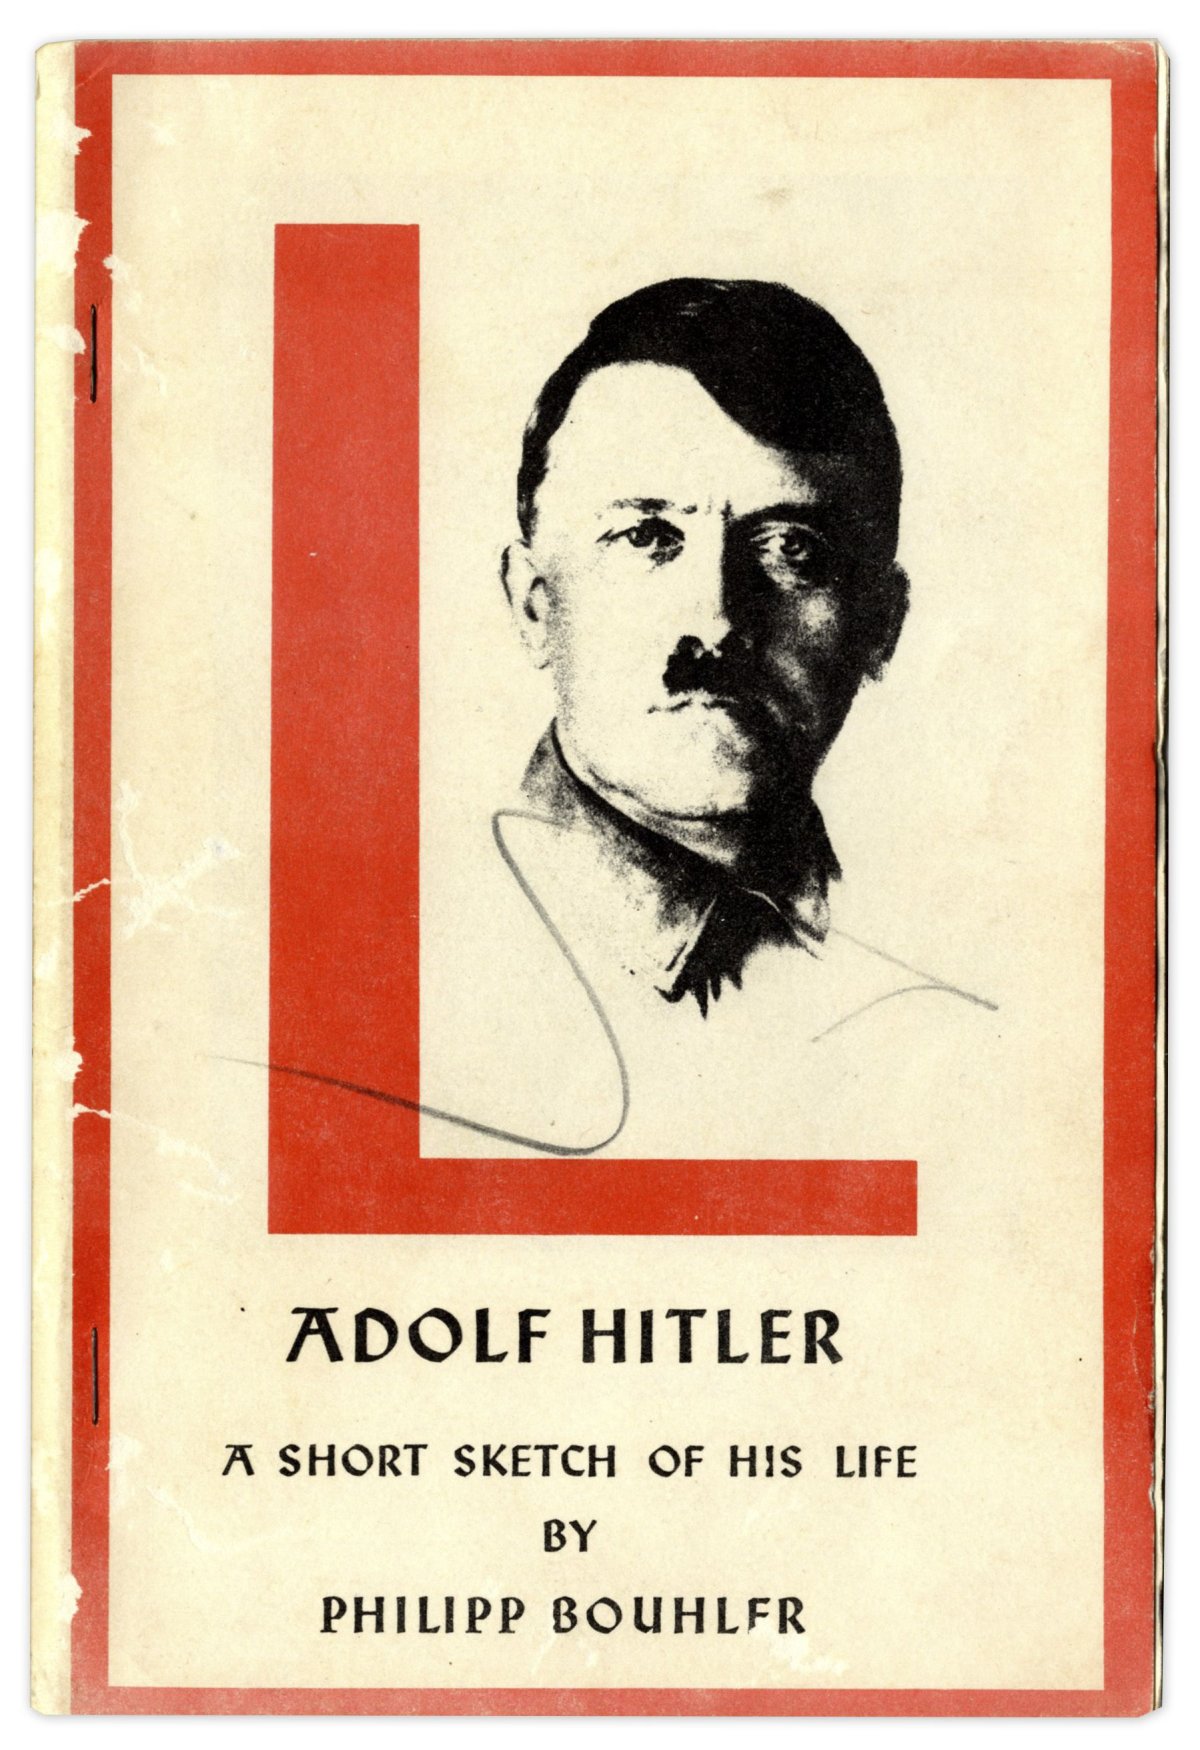 3-26-15 Hitler auction 2